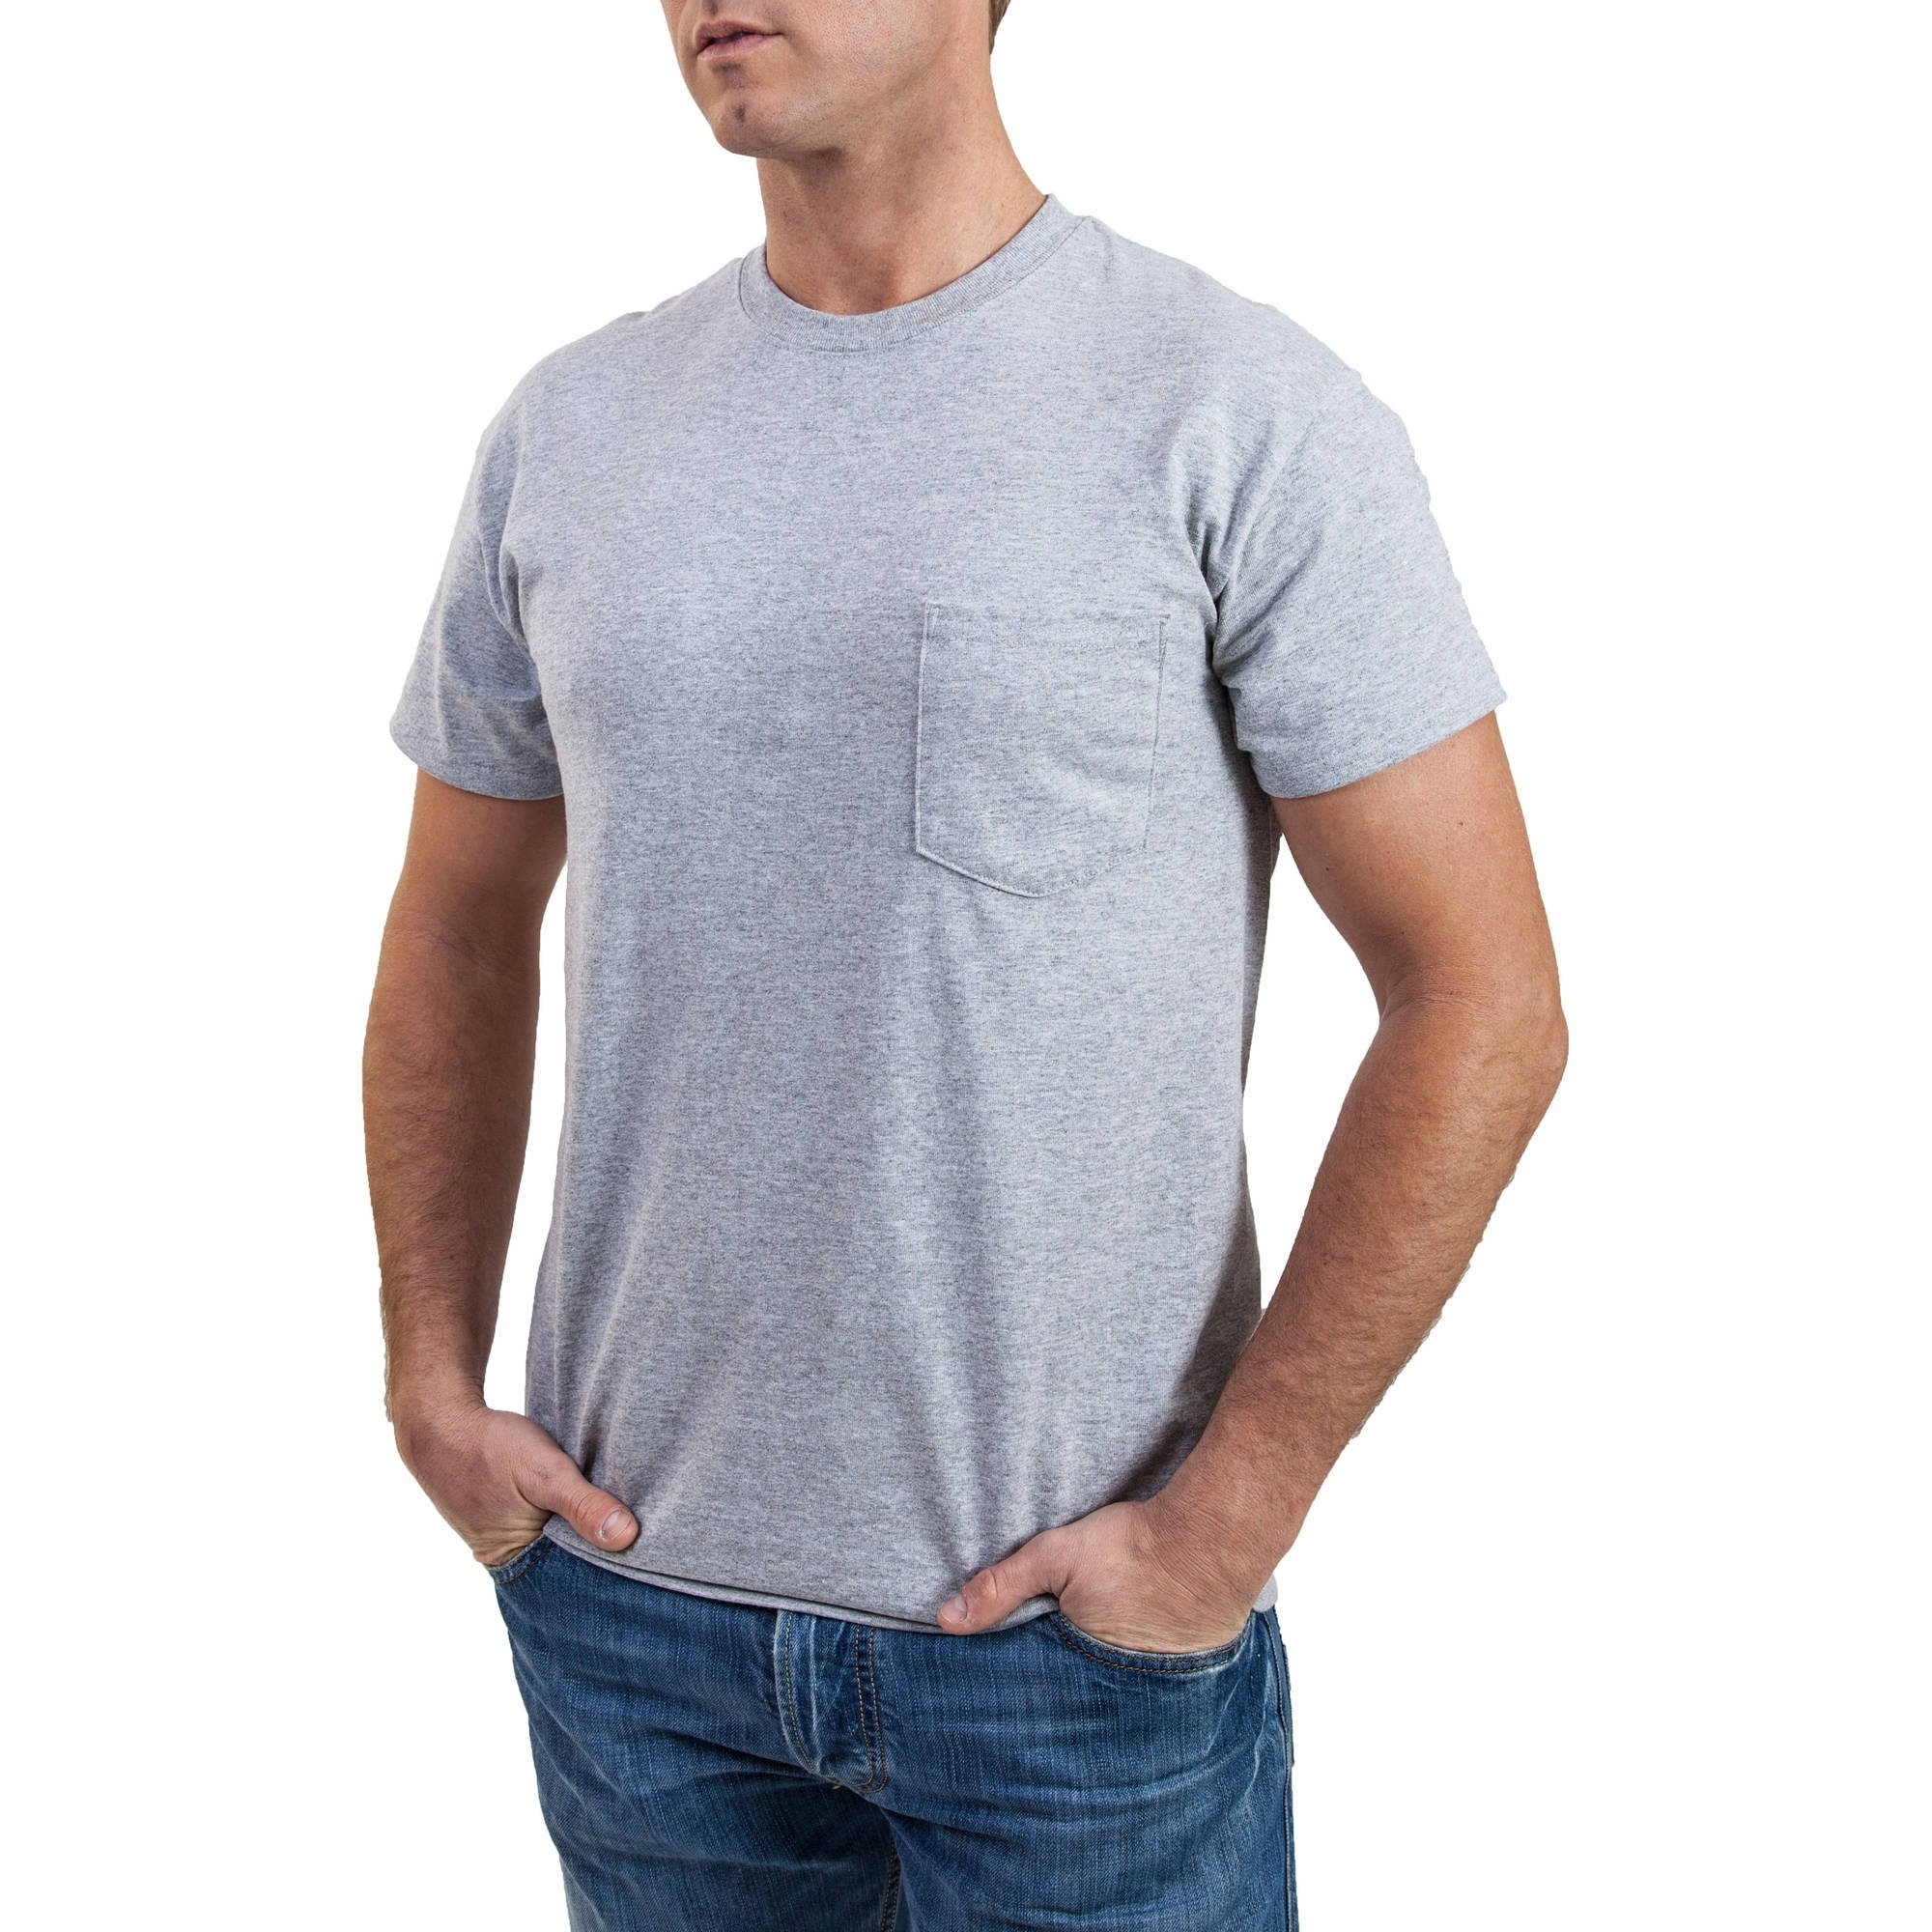 Gildan Pocket T-shirts 6-pack Men's Black and Gray Crew Neck M-XL | eBay